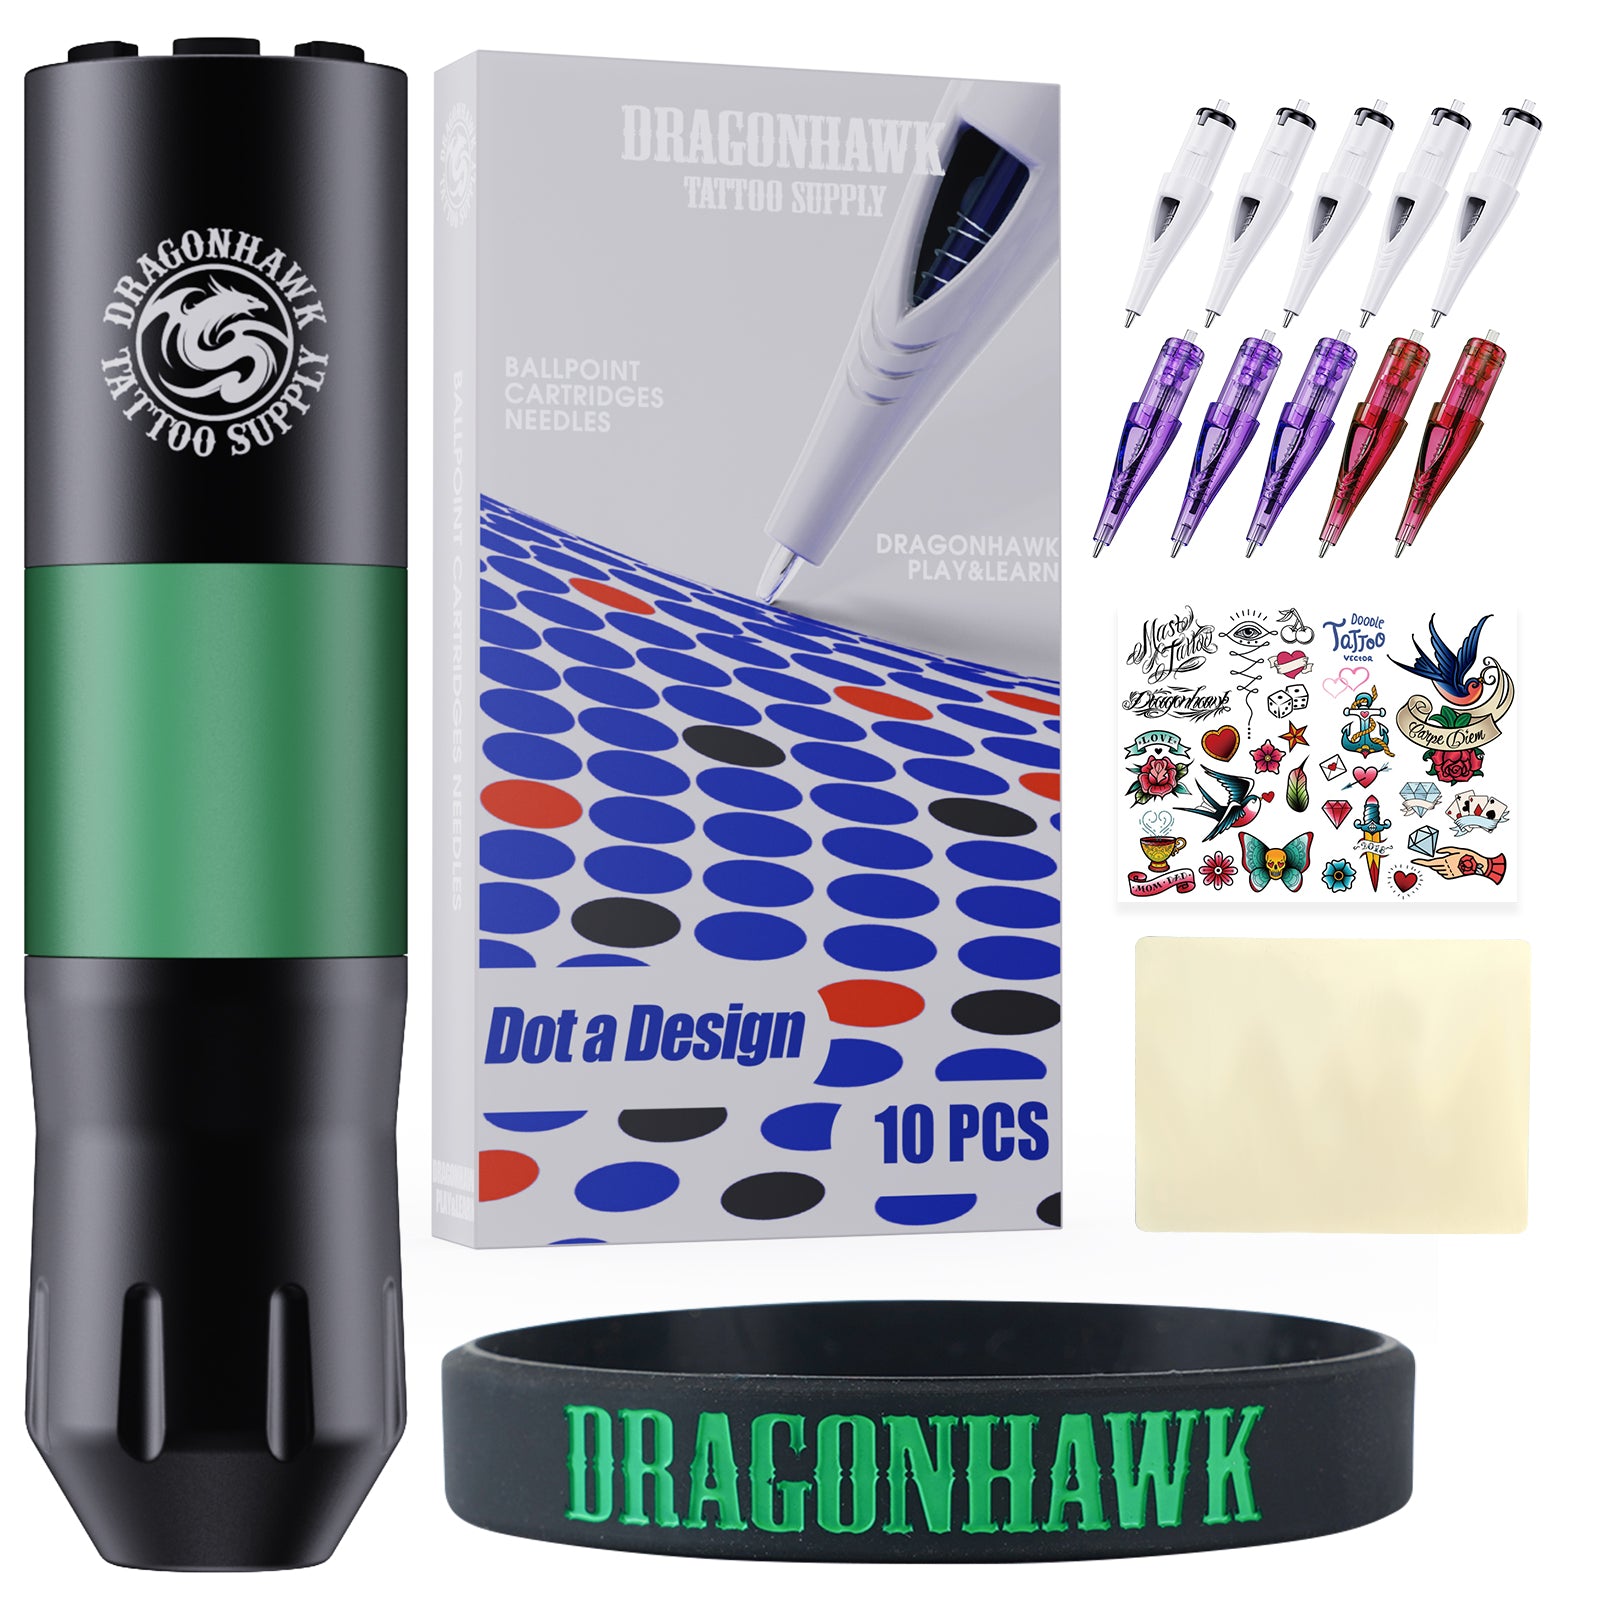 Dragonhawk X2 pro 3.5mm Stroke Machine Tattoo Kit with Ballpoint Cartridges  Needles for Practice & Dotwork